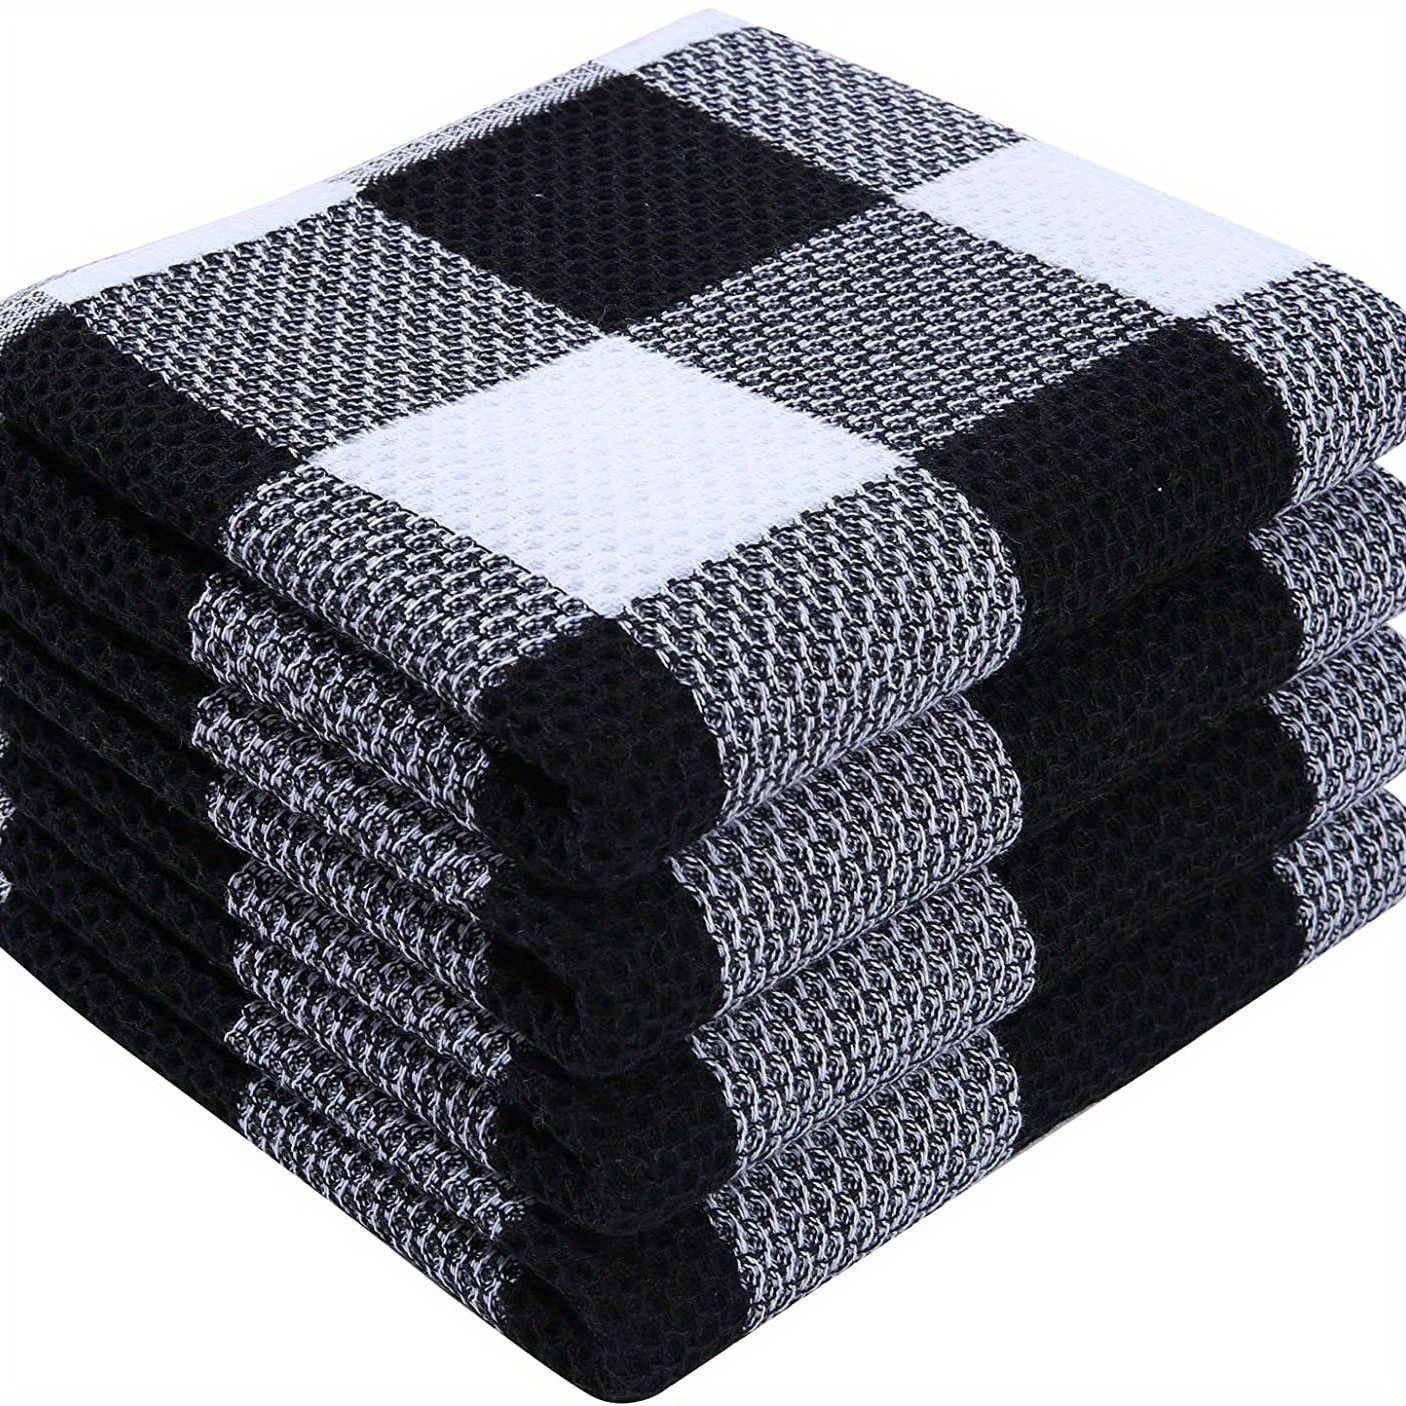 Checkered Design Cotton Dish Towels